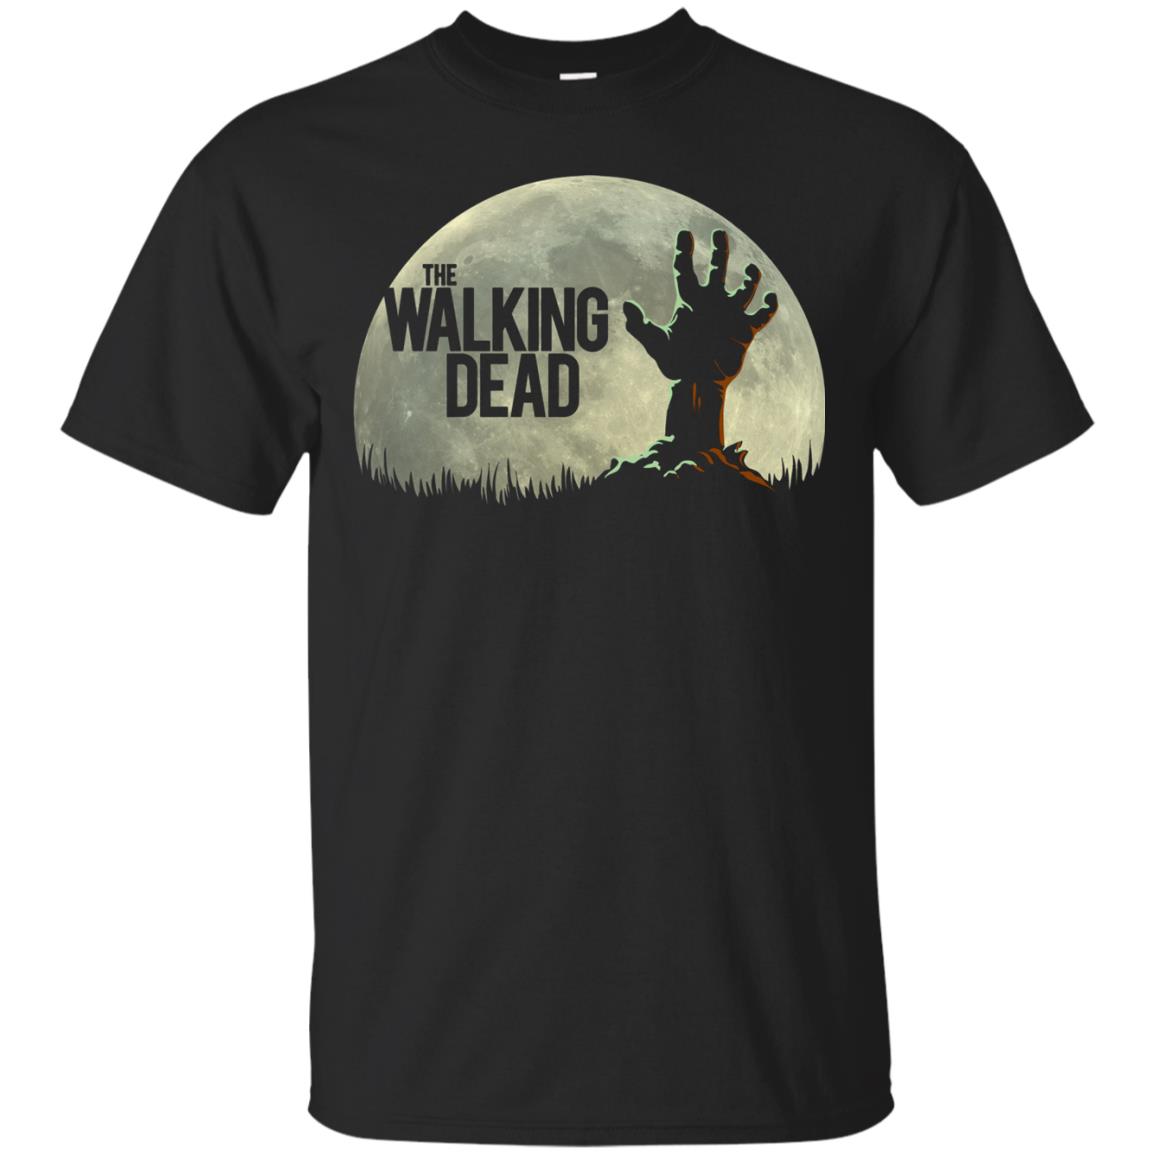 The Walking Dead T-shirt - black